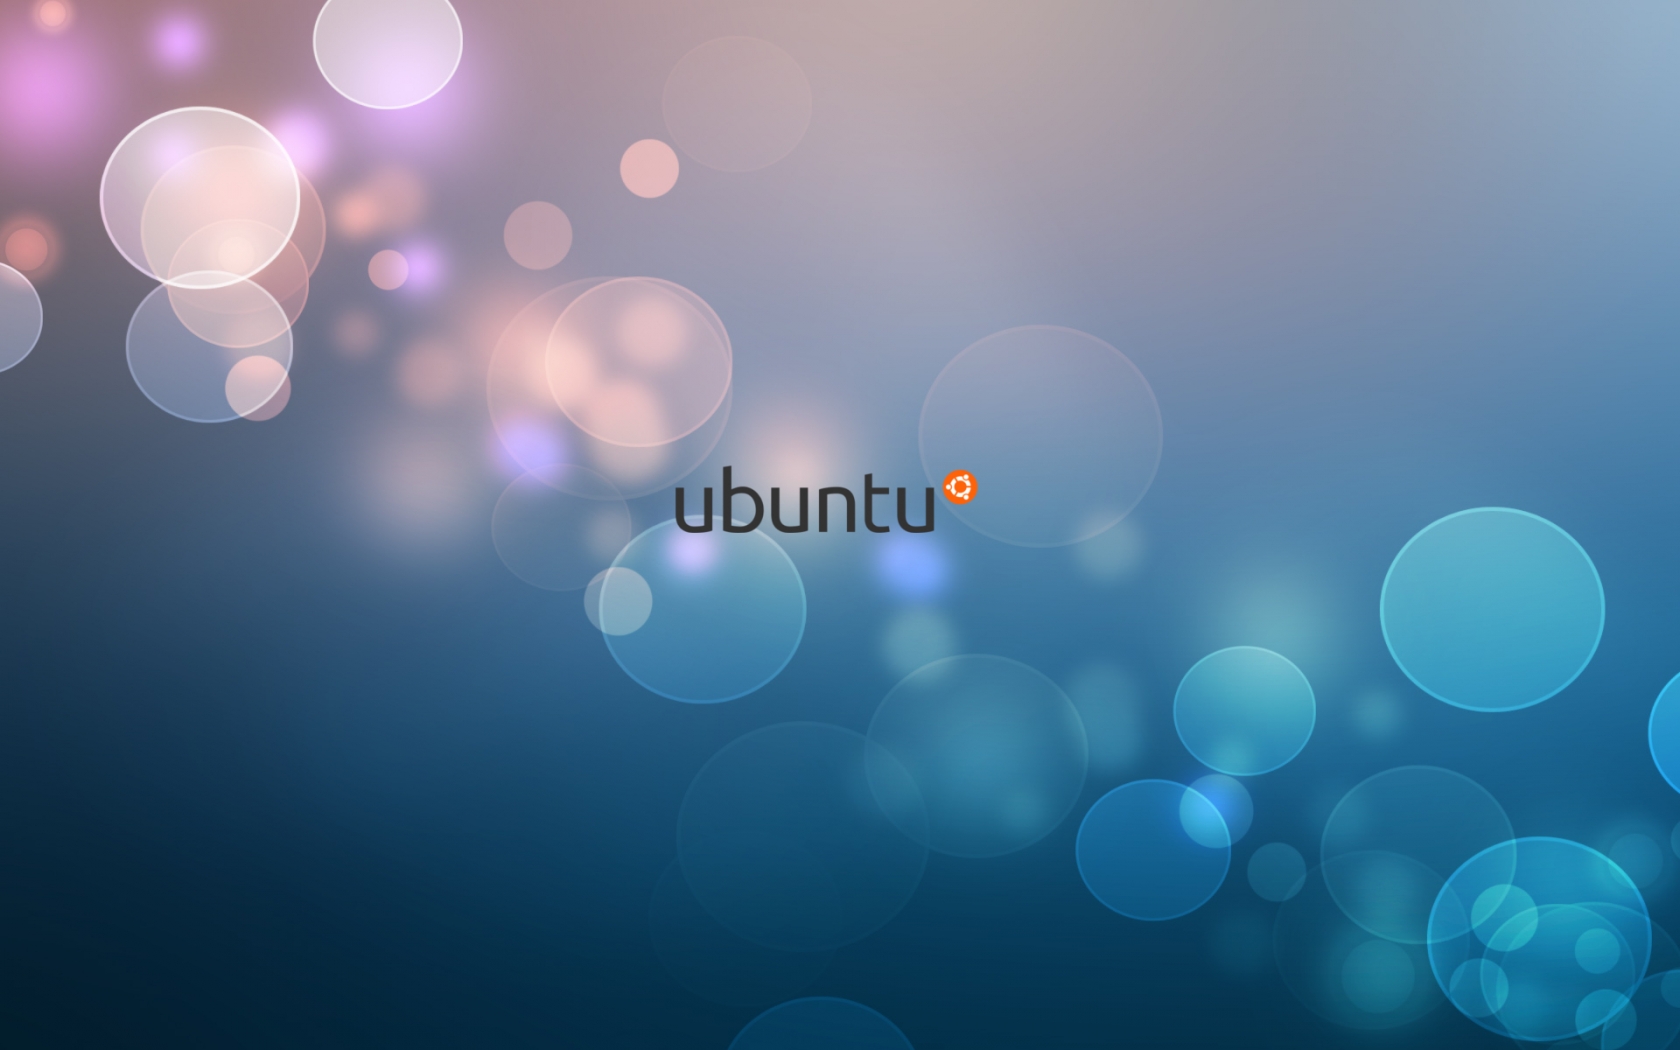 Ubuntu Minimalistic for 1680 x 1050 widescreen resolution